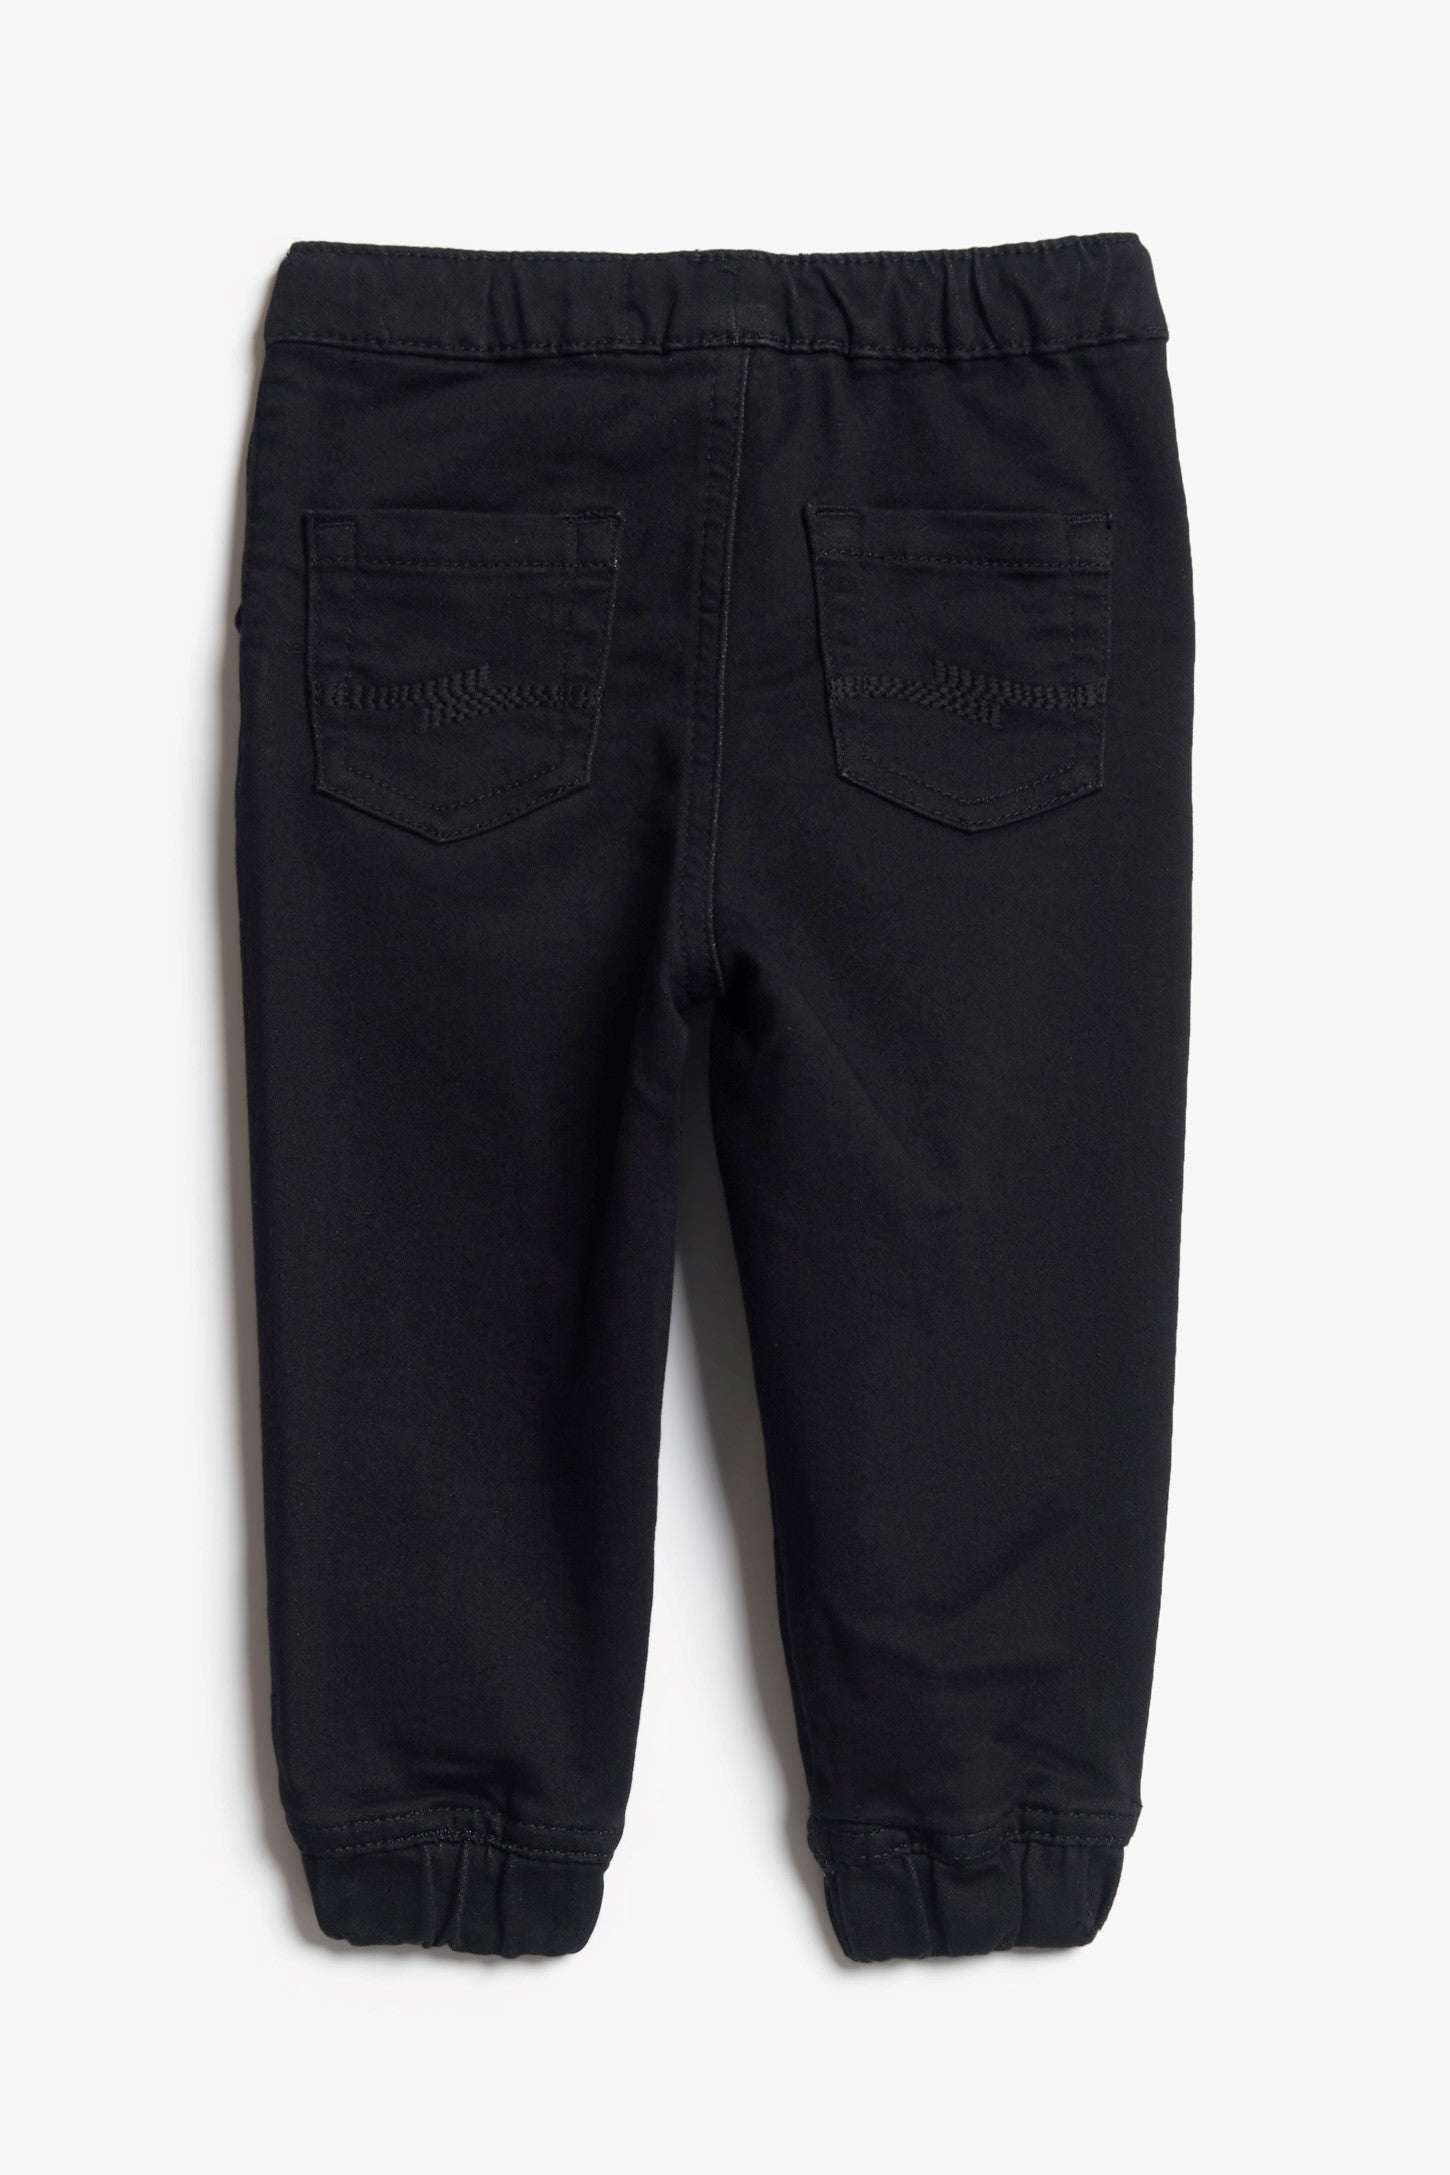 Pantalon jogger jeans, 2T-3T - Bébé garçon && NOIR